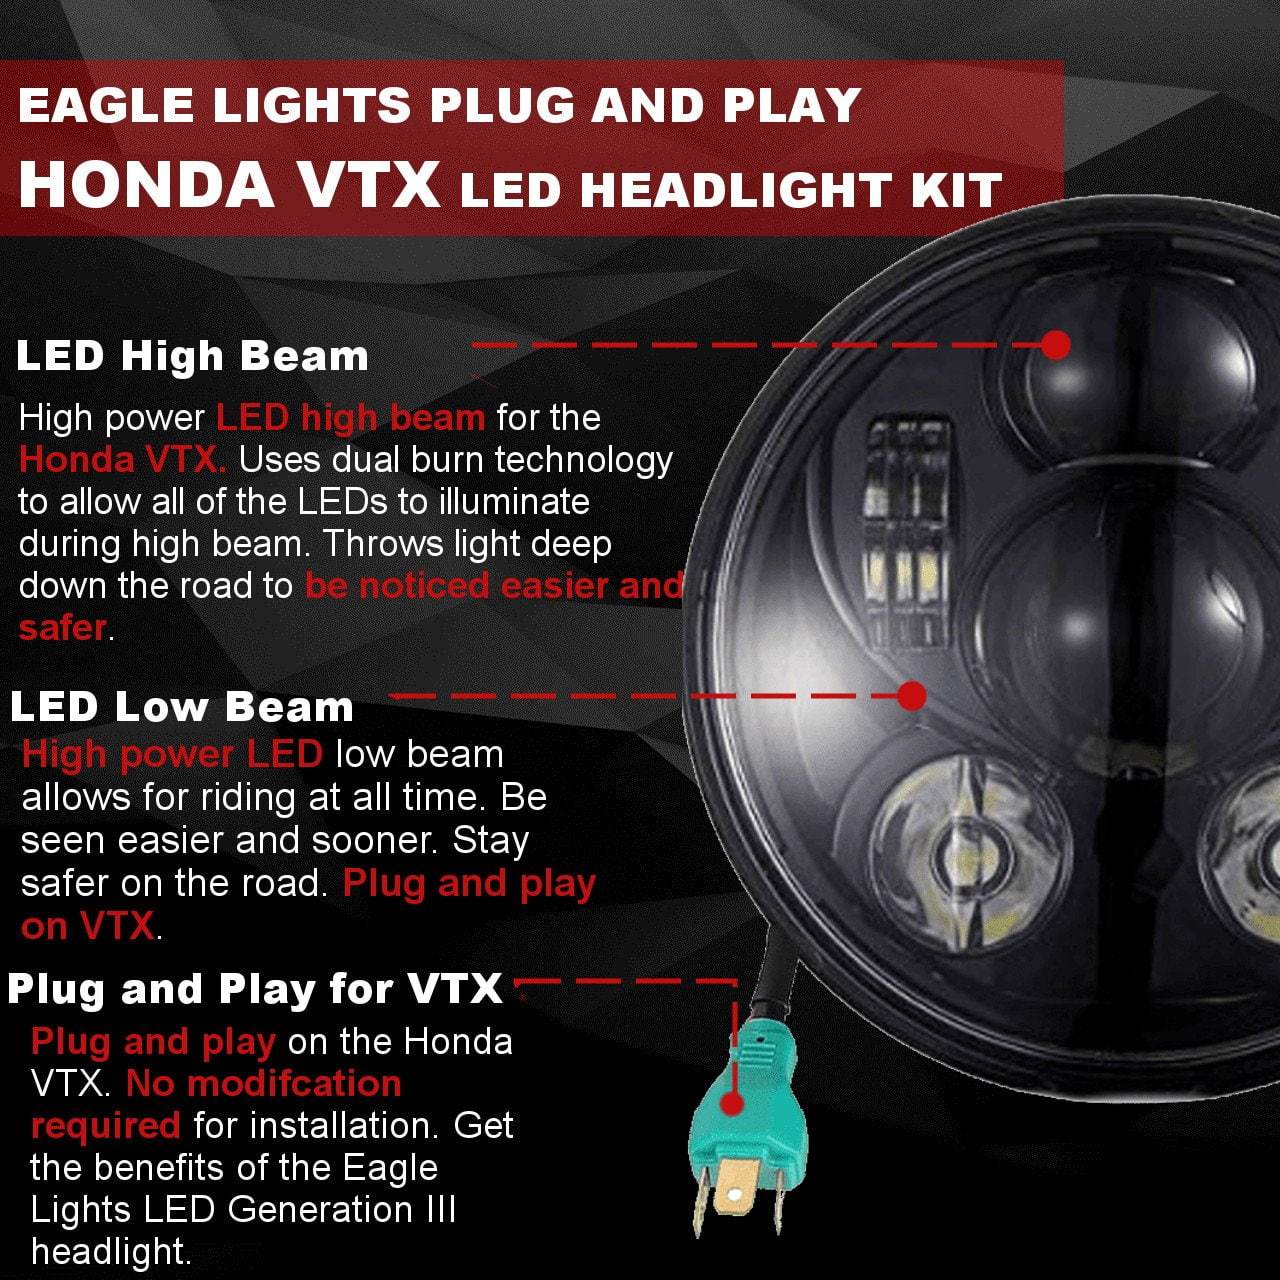 Honda VTX LED Headlights - Eagle Lights Generation III LED Headlight For Honda VTX 1300 And 1800 - Includes VTX Bracket And Hardware